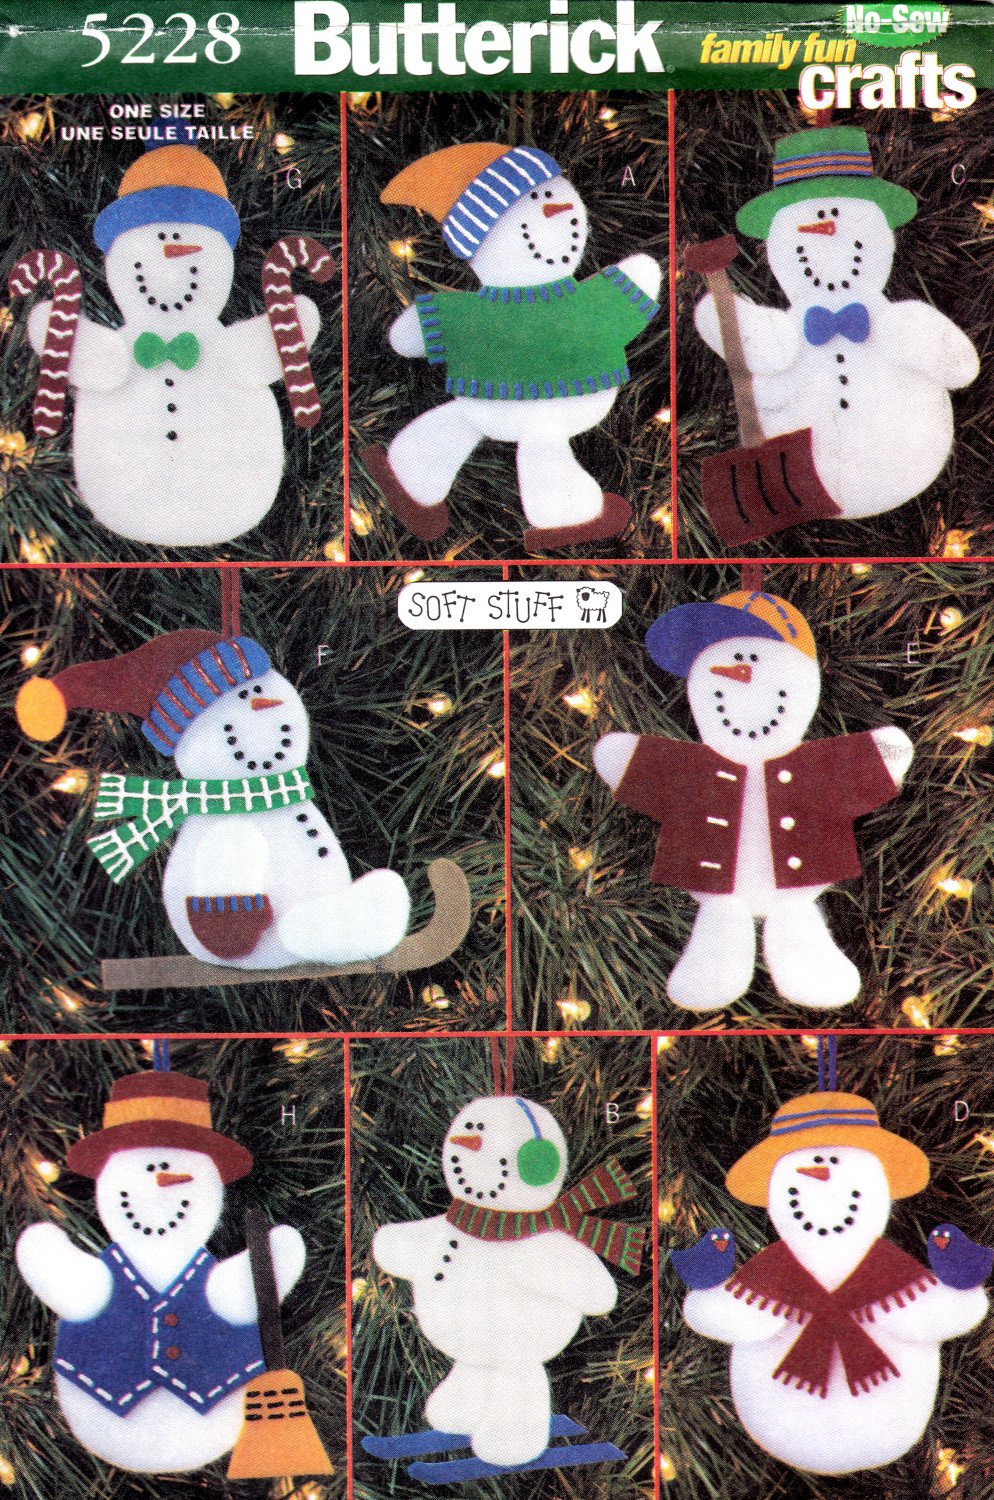 Butterick 5228 Soft Stuff Snowman Ornament No Sew Crafts Sewing Pattern Size OSZ